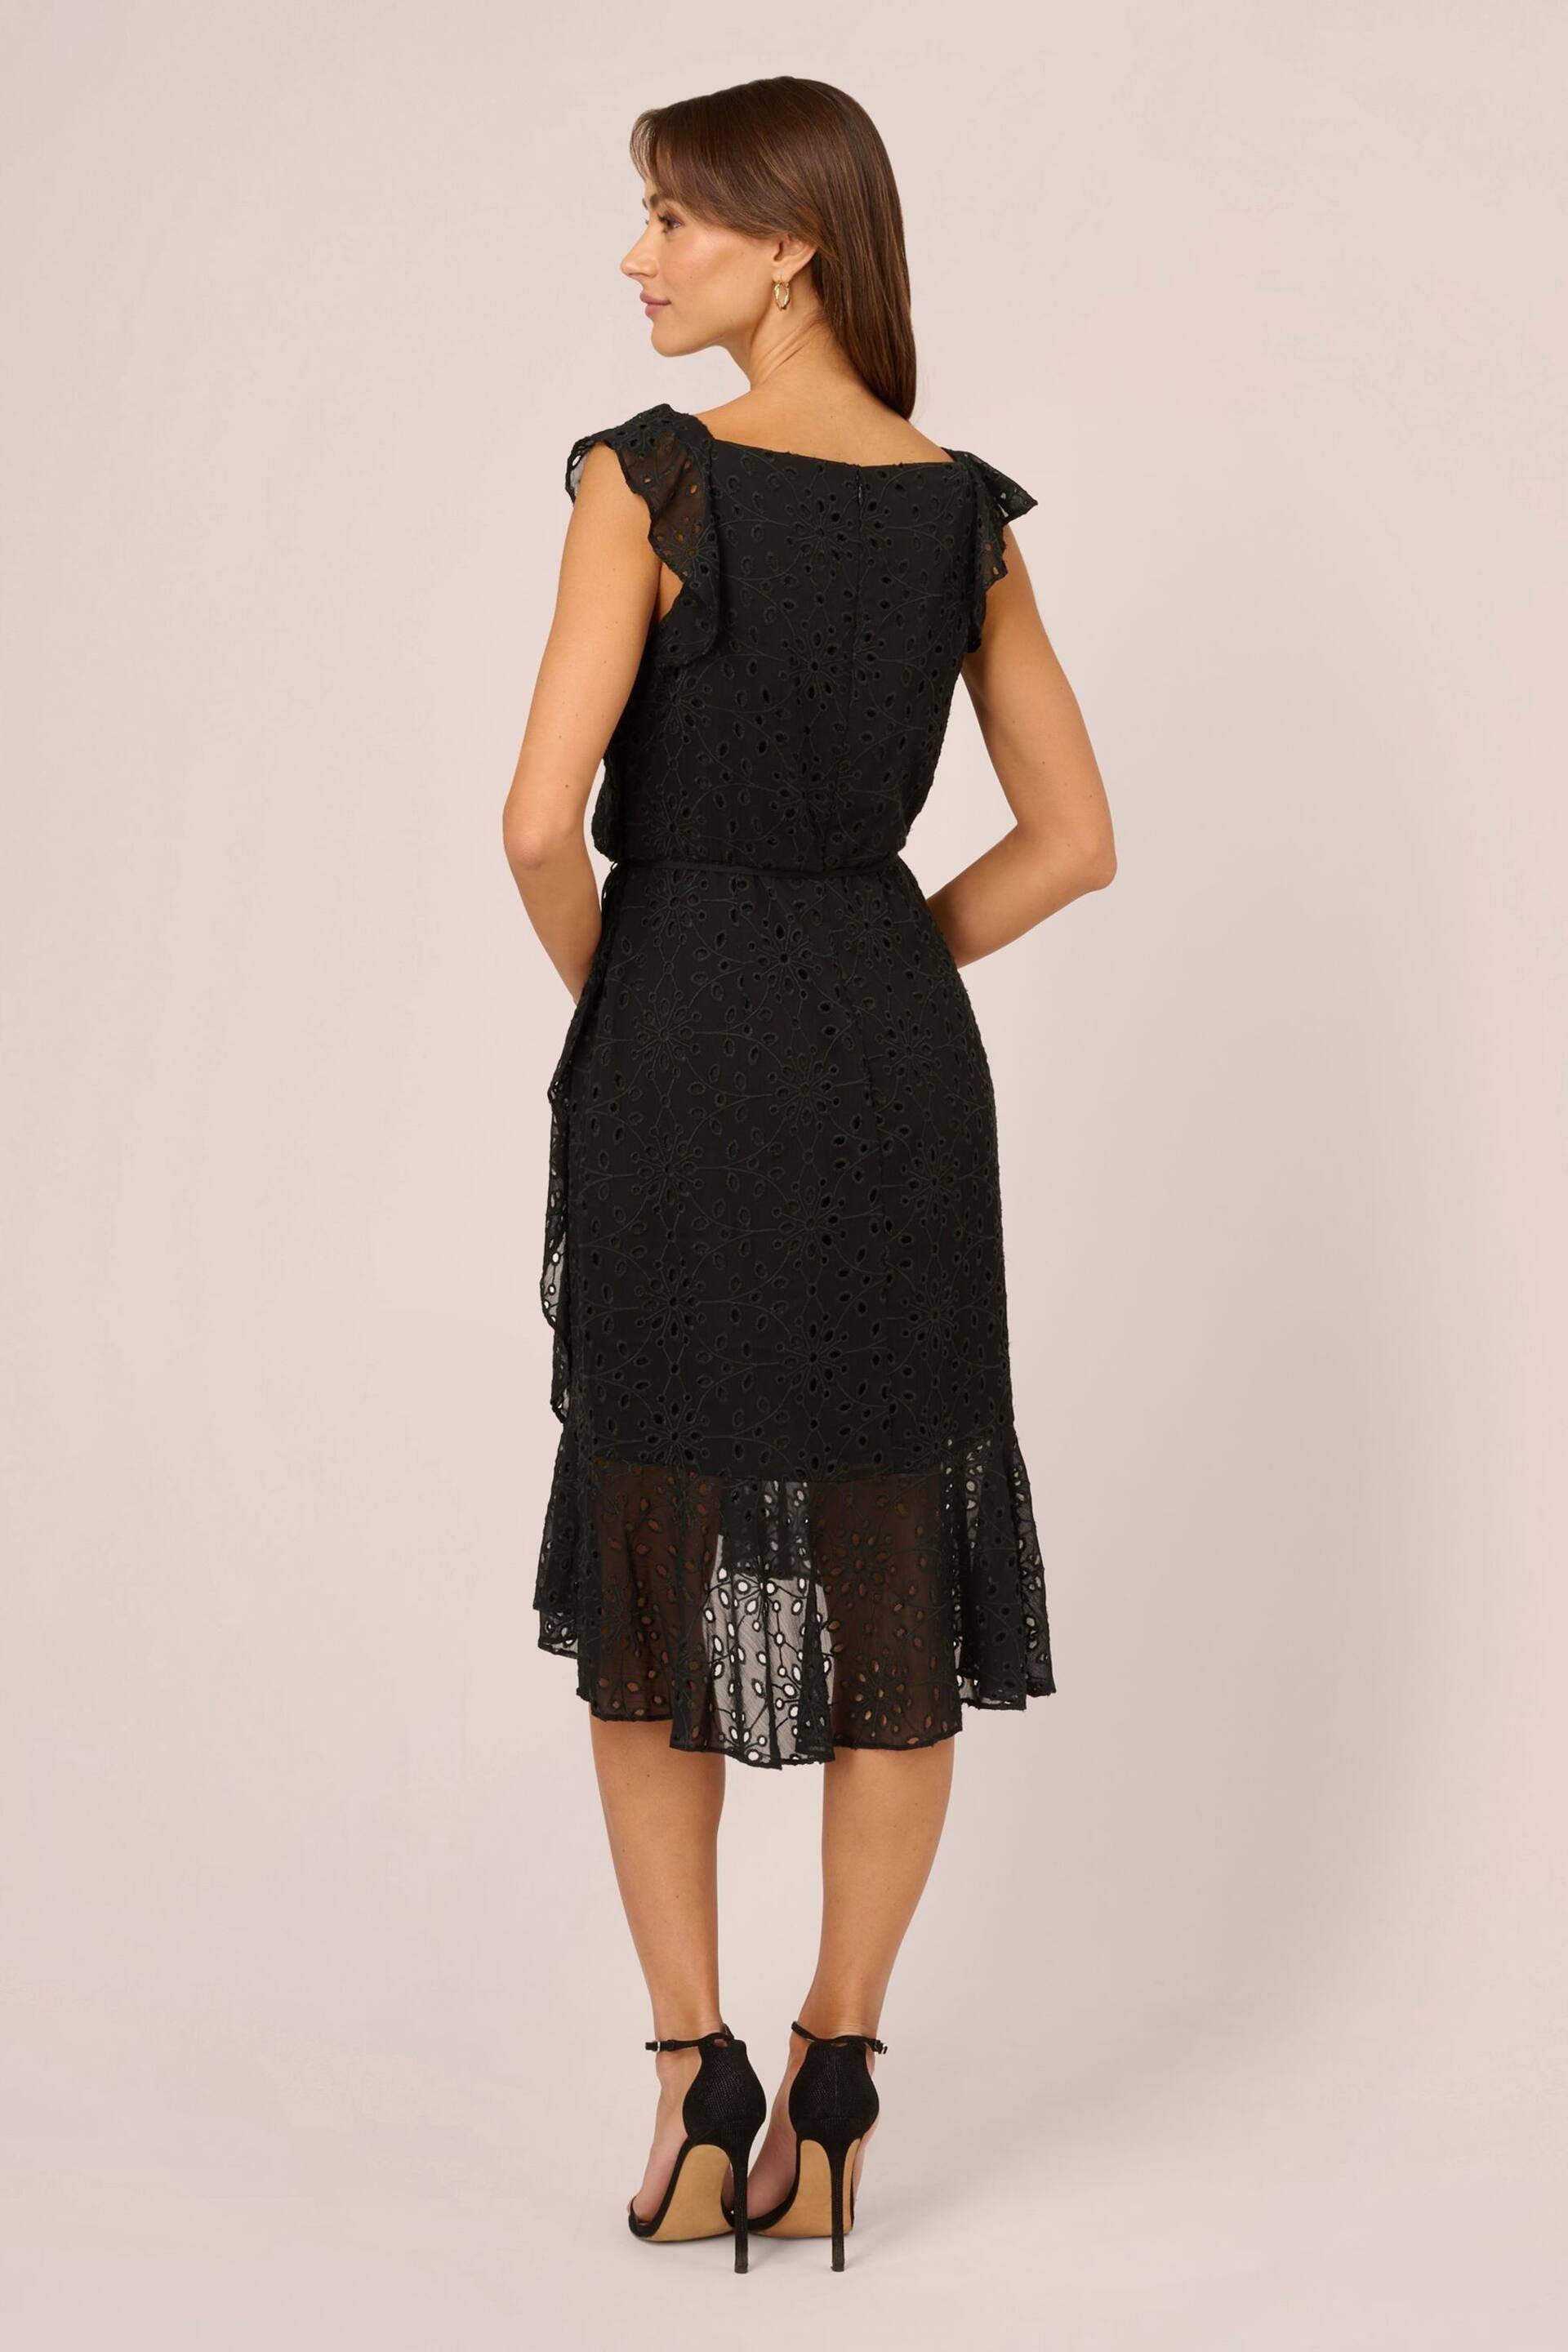 Adrianna Papell Ruffle Midi Black Dress - Image 2 of 7